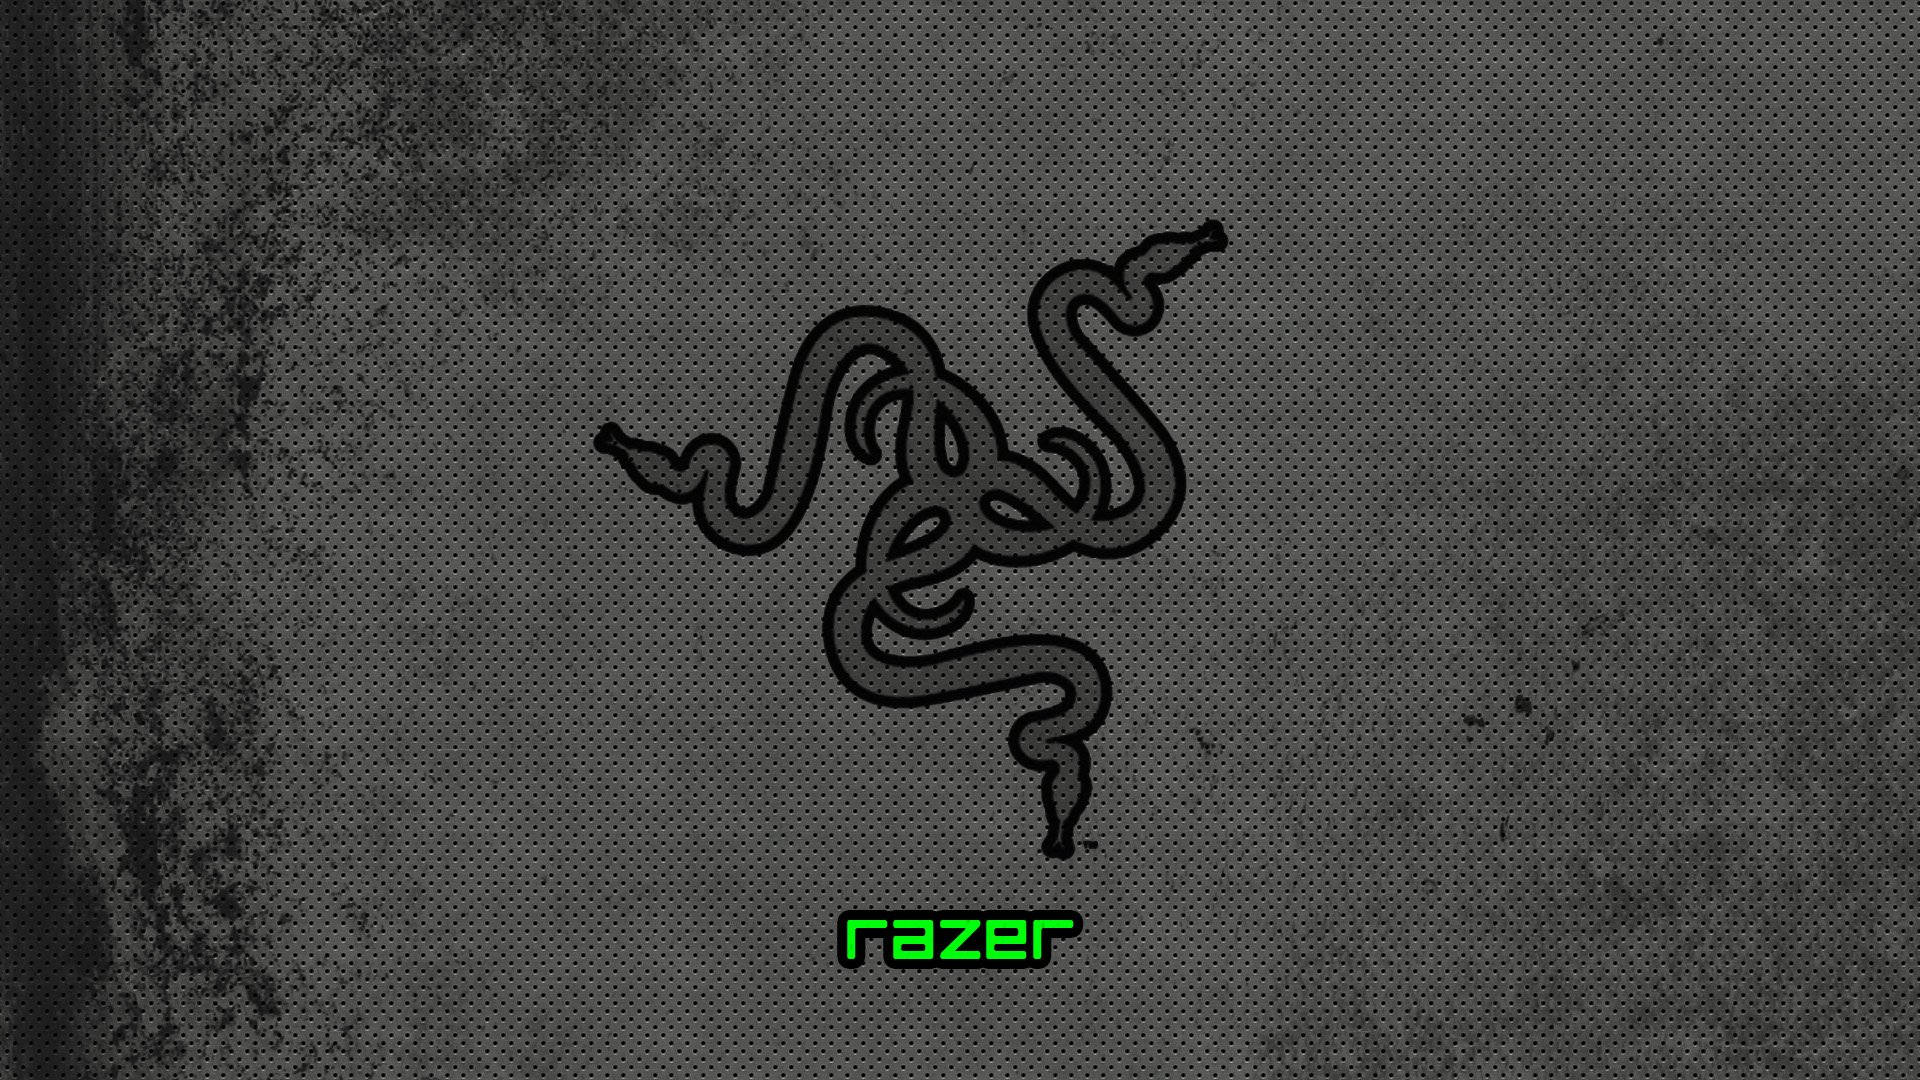 Grayscale Dotted Razer Pc Logo Background